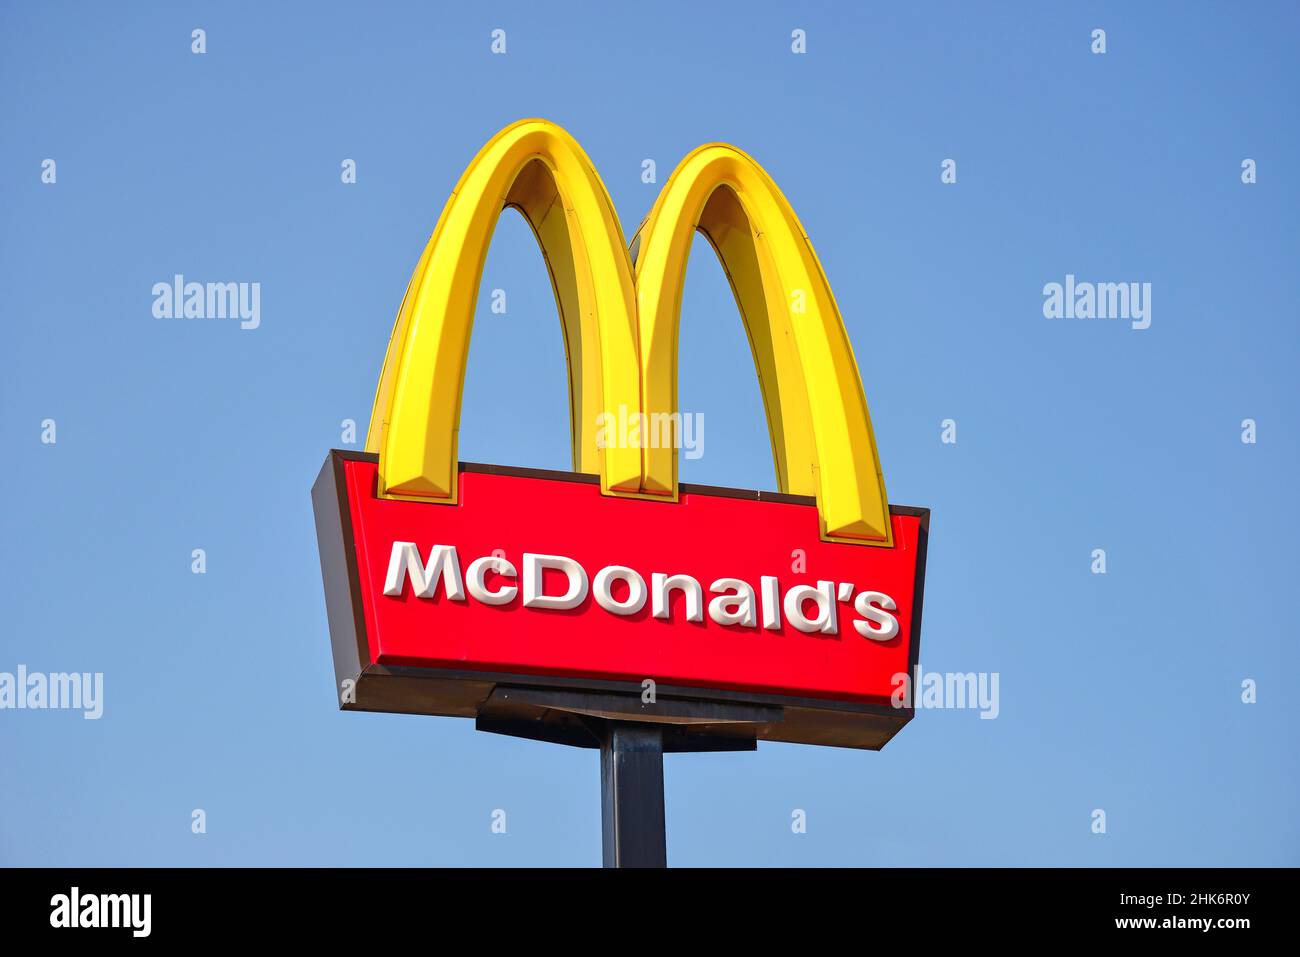 McDonald's restaurant sign, Grand Parade, Skegness, Lincolnshire ...